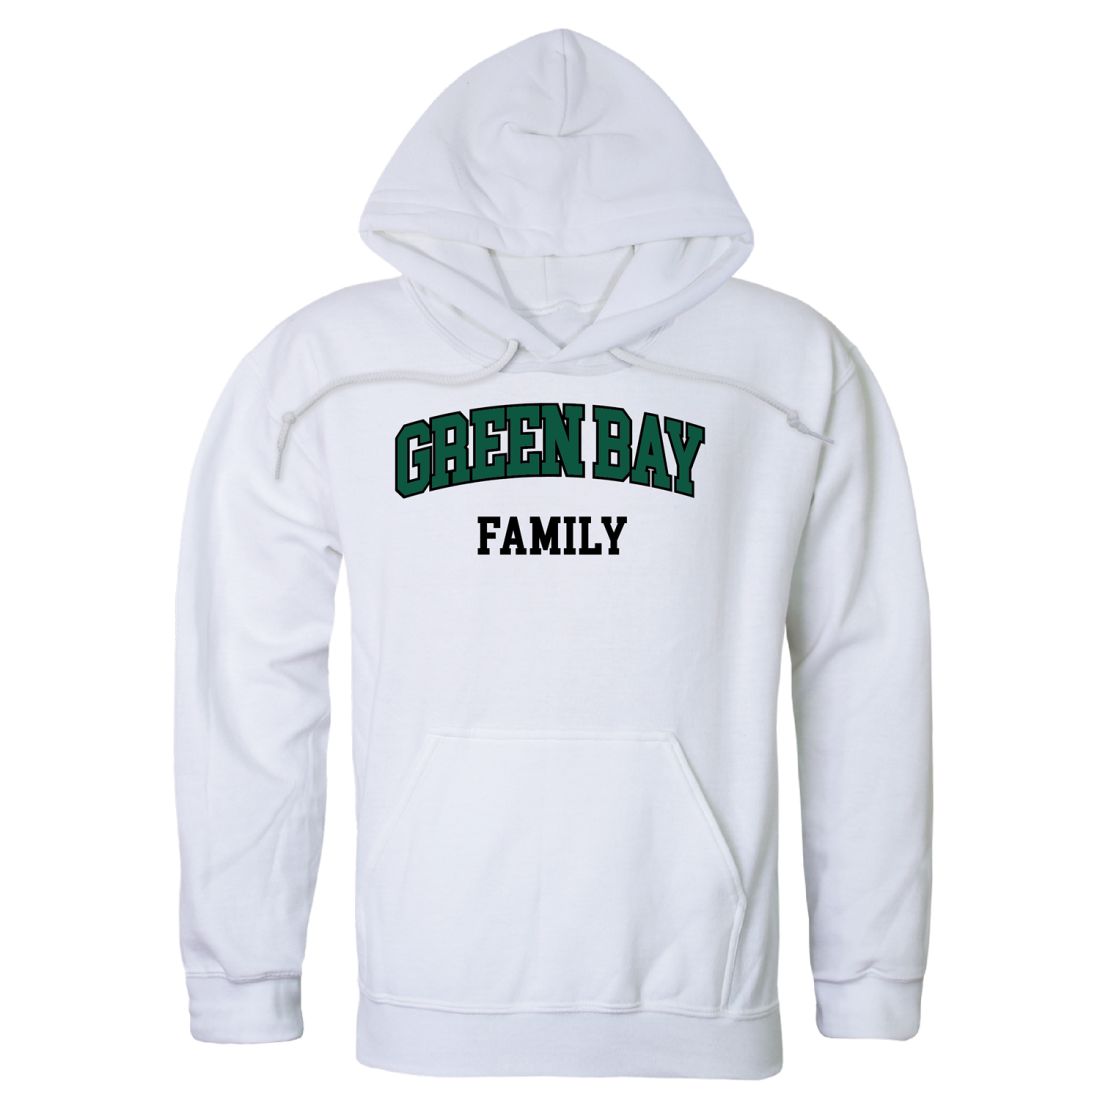 UWGB University of Wisconsin-Green Bay Phoenix Family Hoodie Sweatshirts